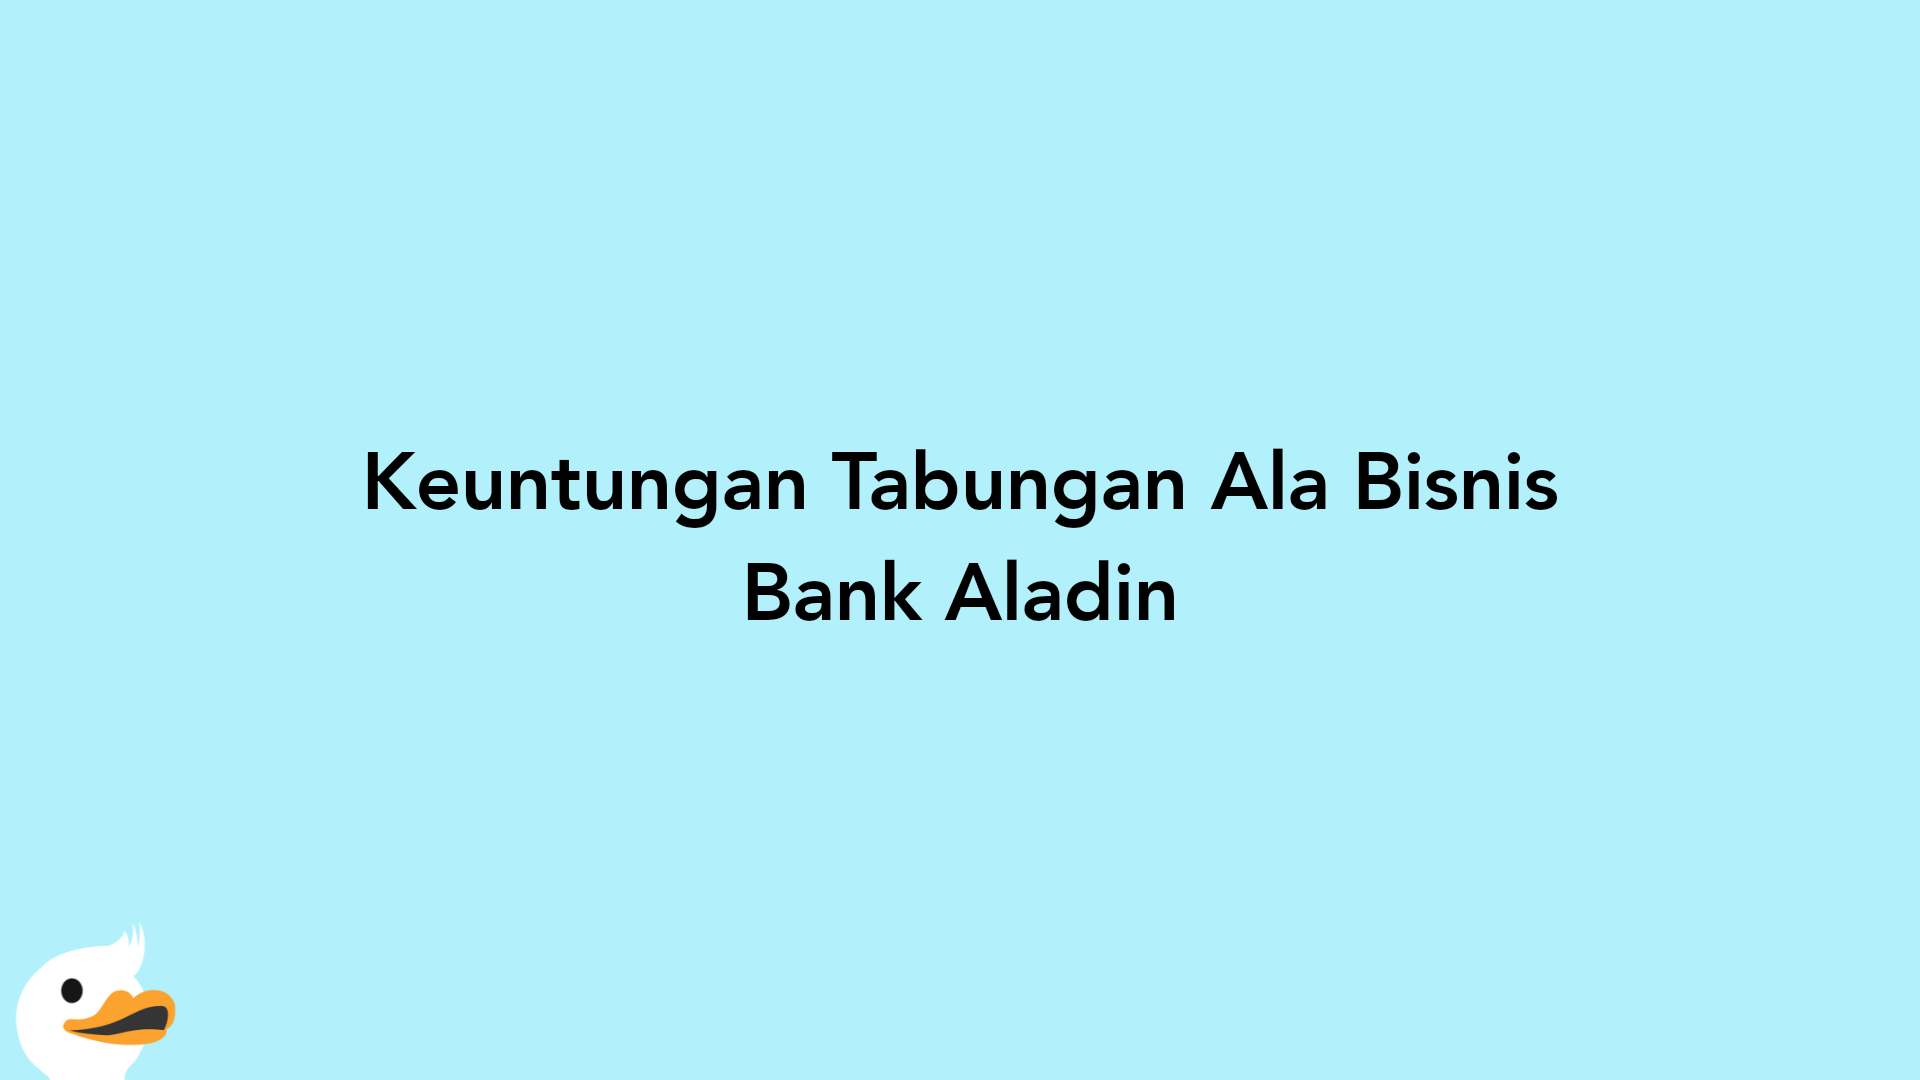 Keuntungan Tabungan Ala Bisnis Bank Aladin